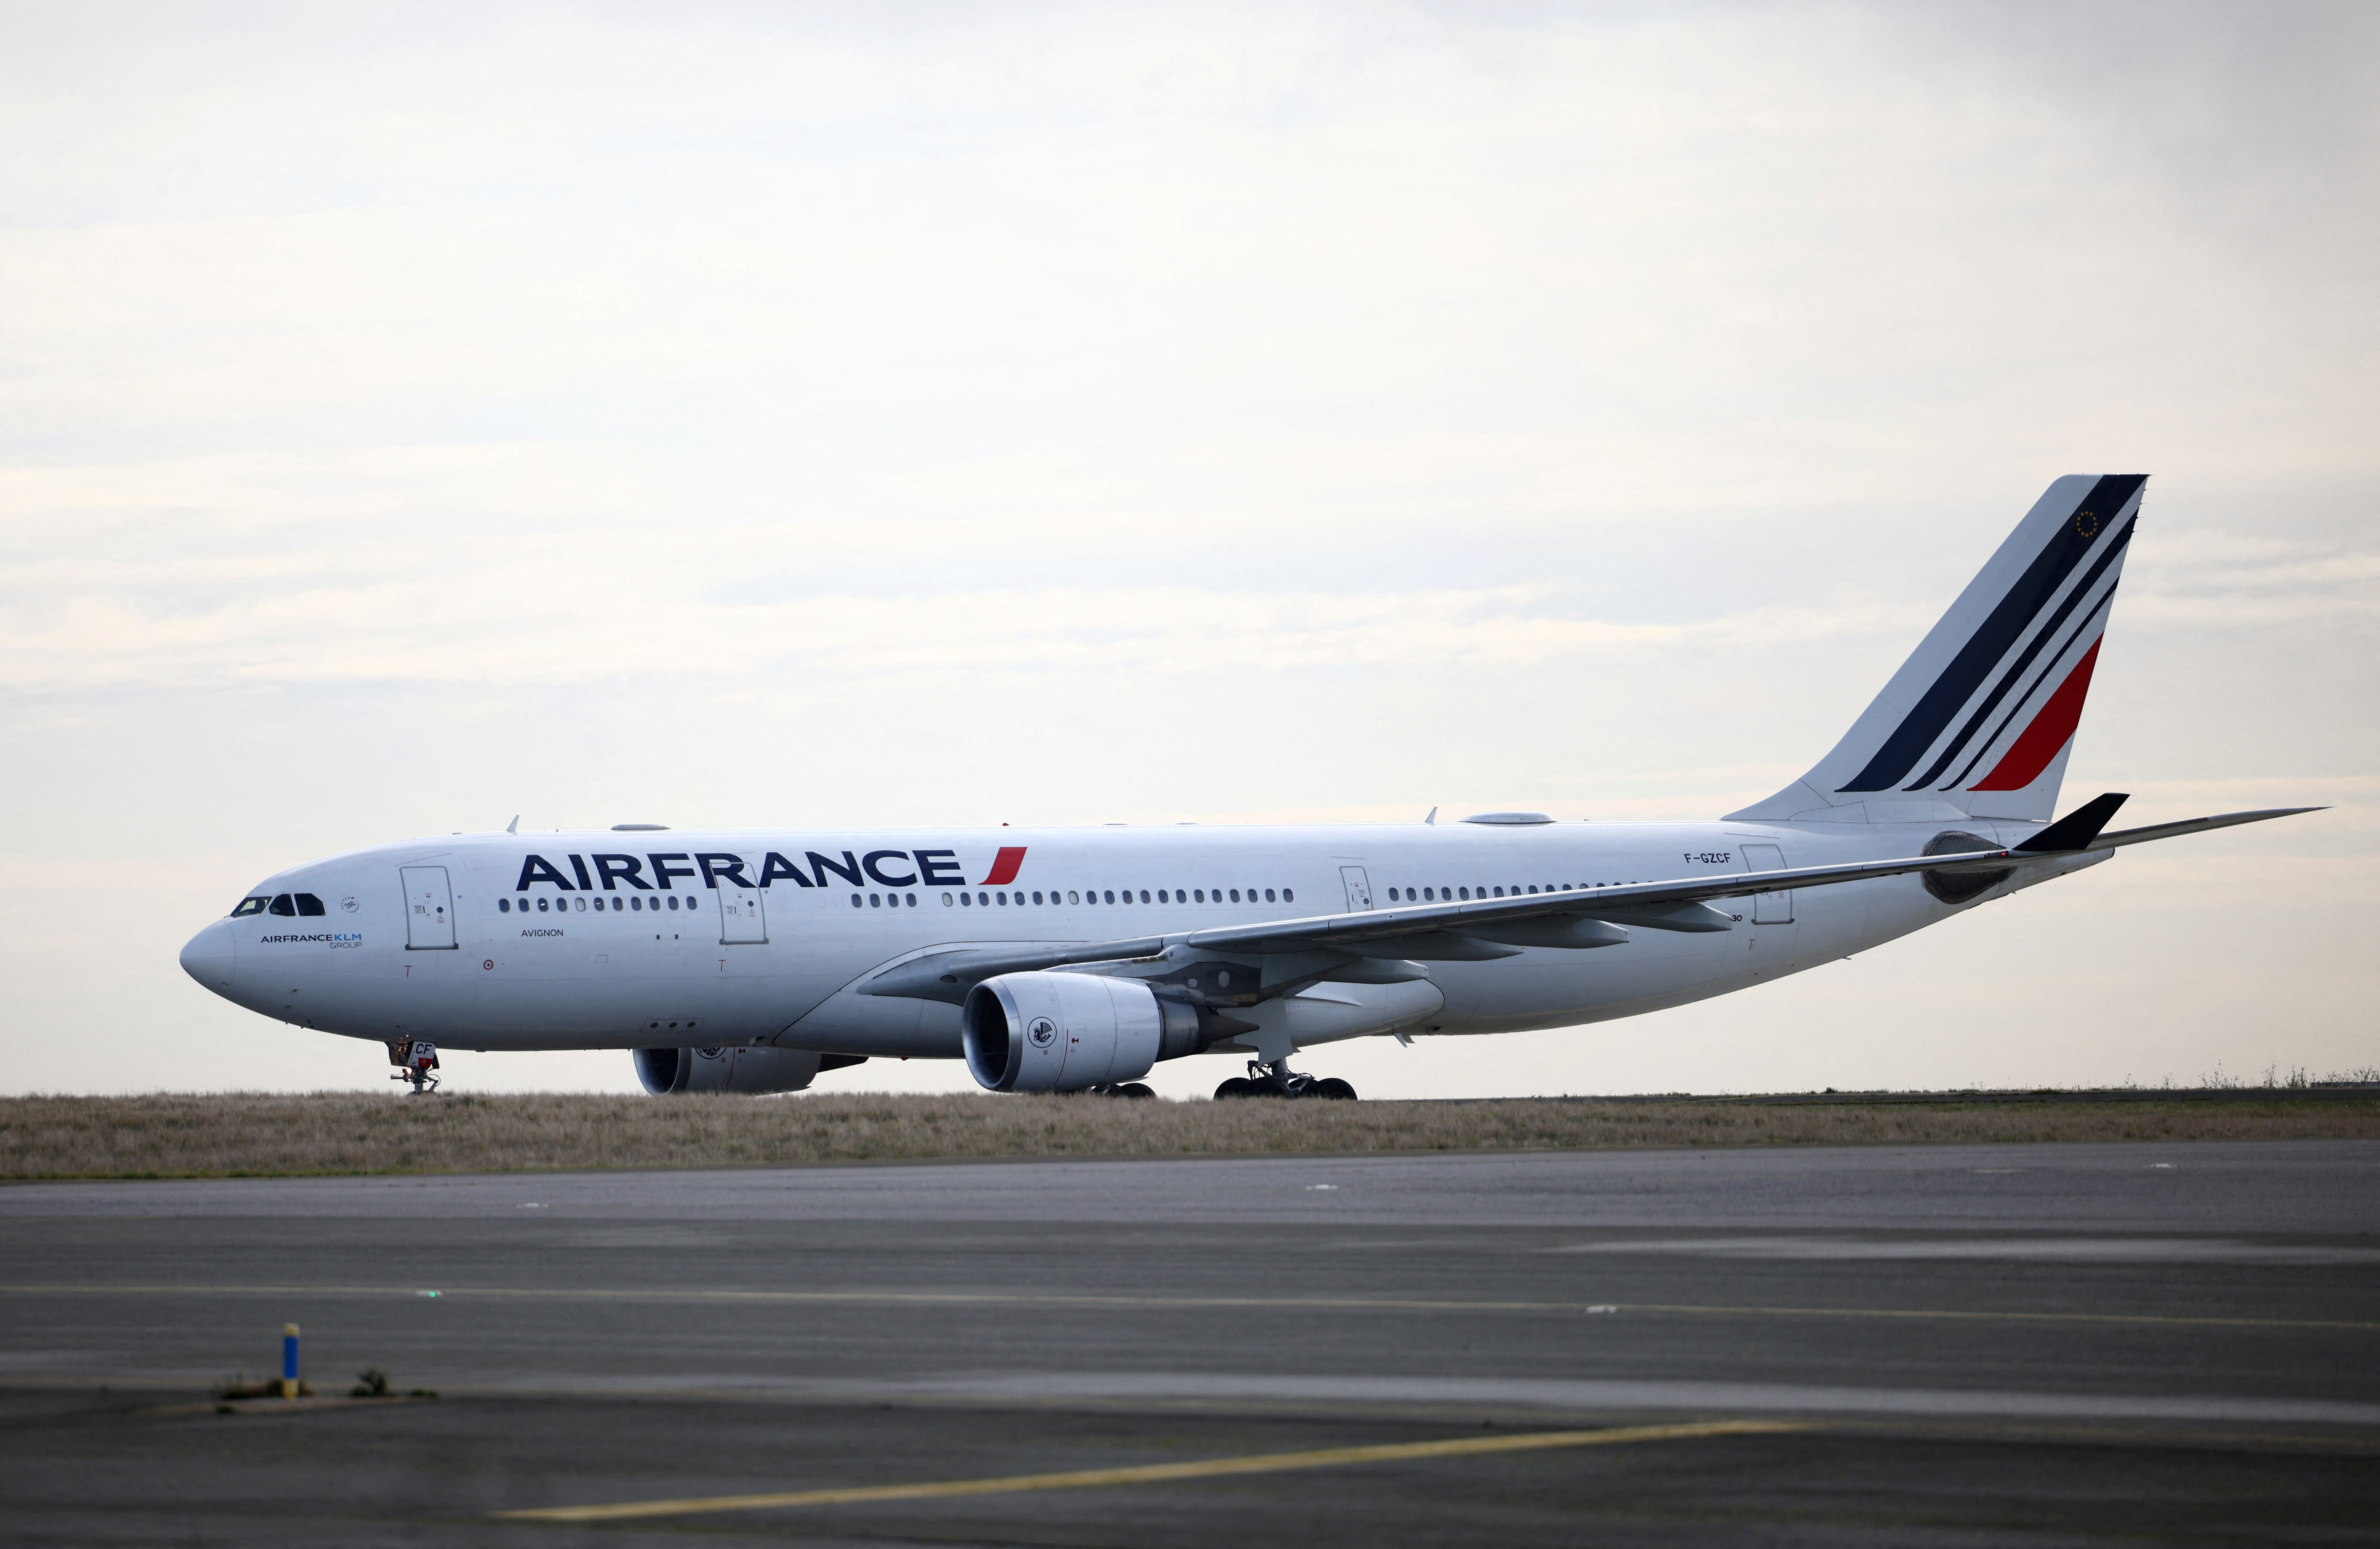 An Air France Airbus A330 airplane takes off from Paris Charles de Gaulle airport in Roissy-en-France near Paris, France, December 2, 2021. REUTERS/Sarah Meyssonnier